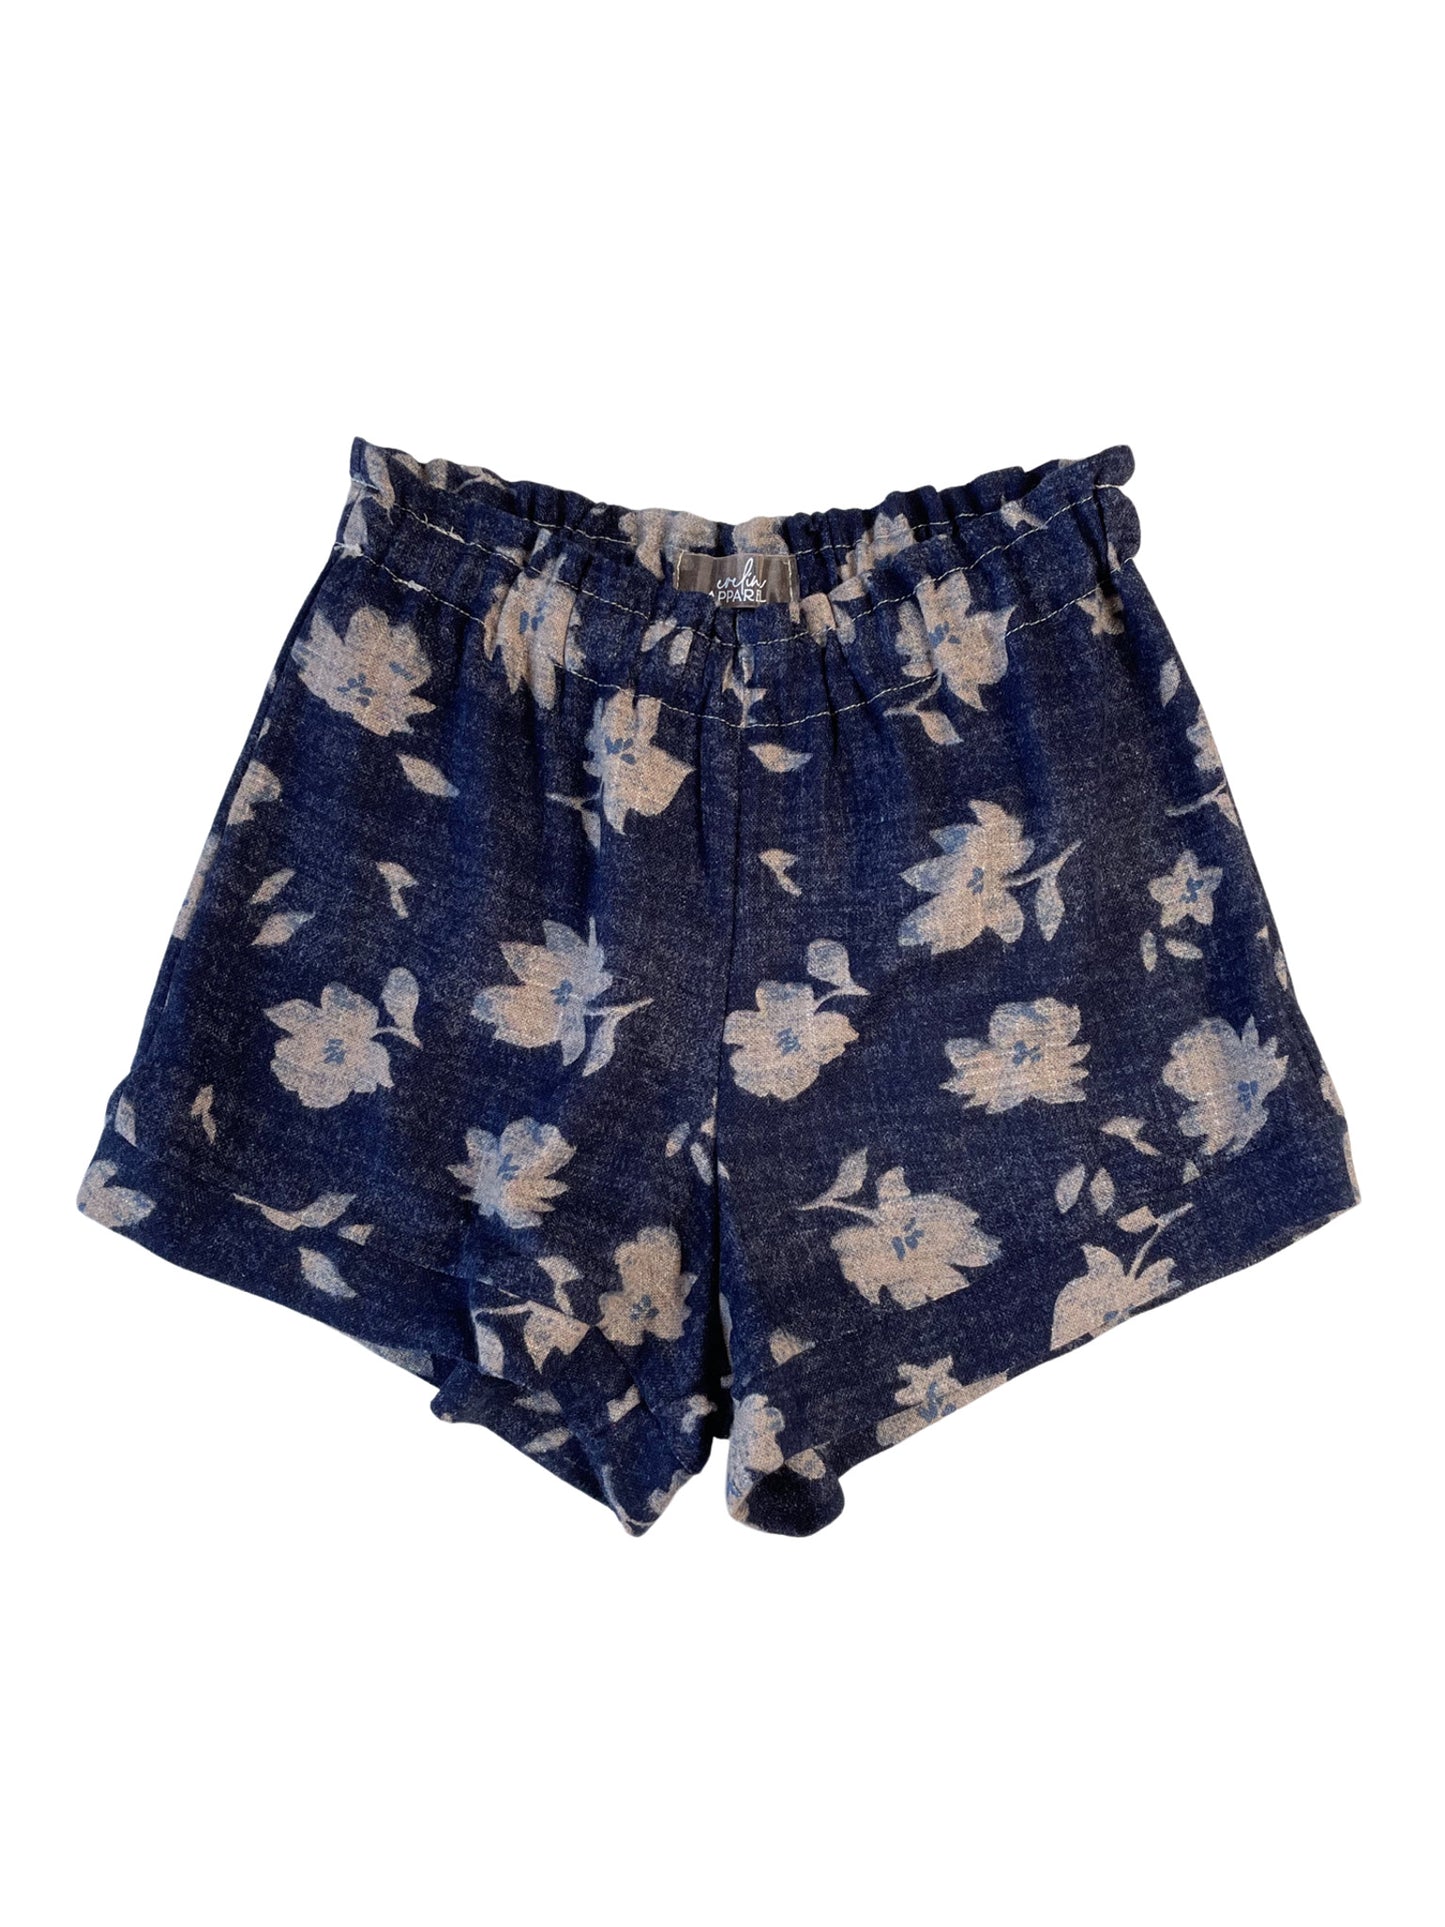 Linen ruffle shorts / navy floral